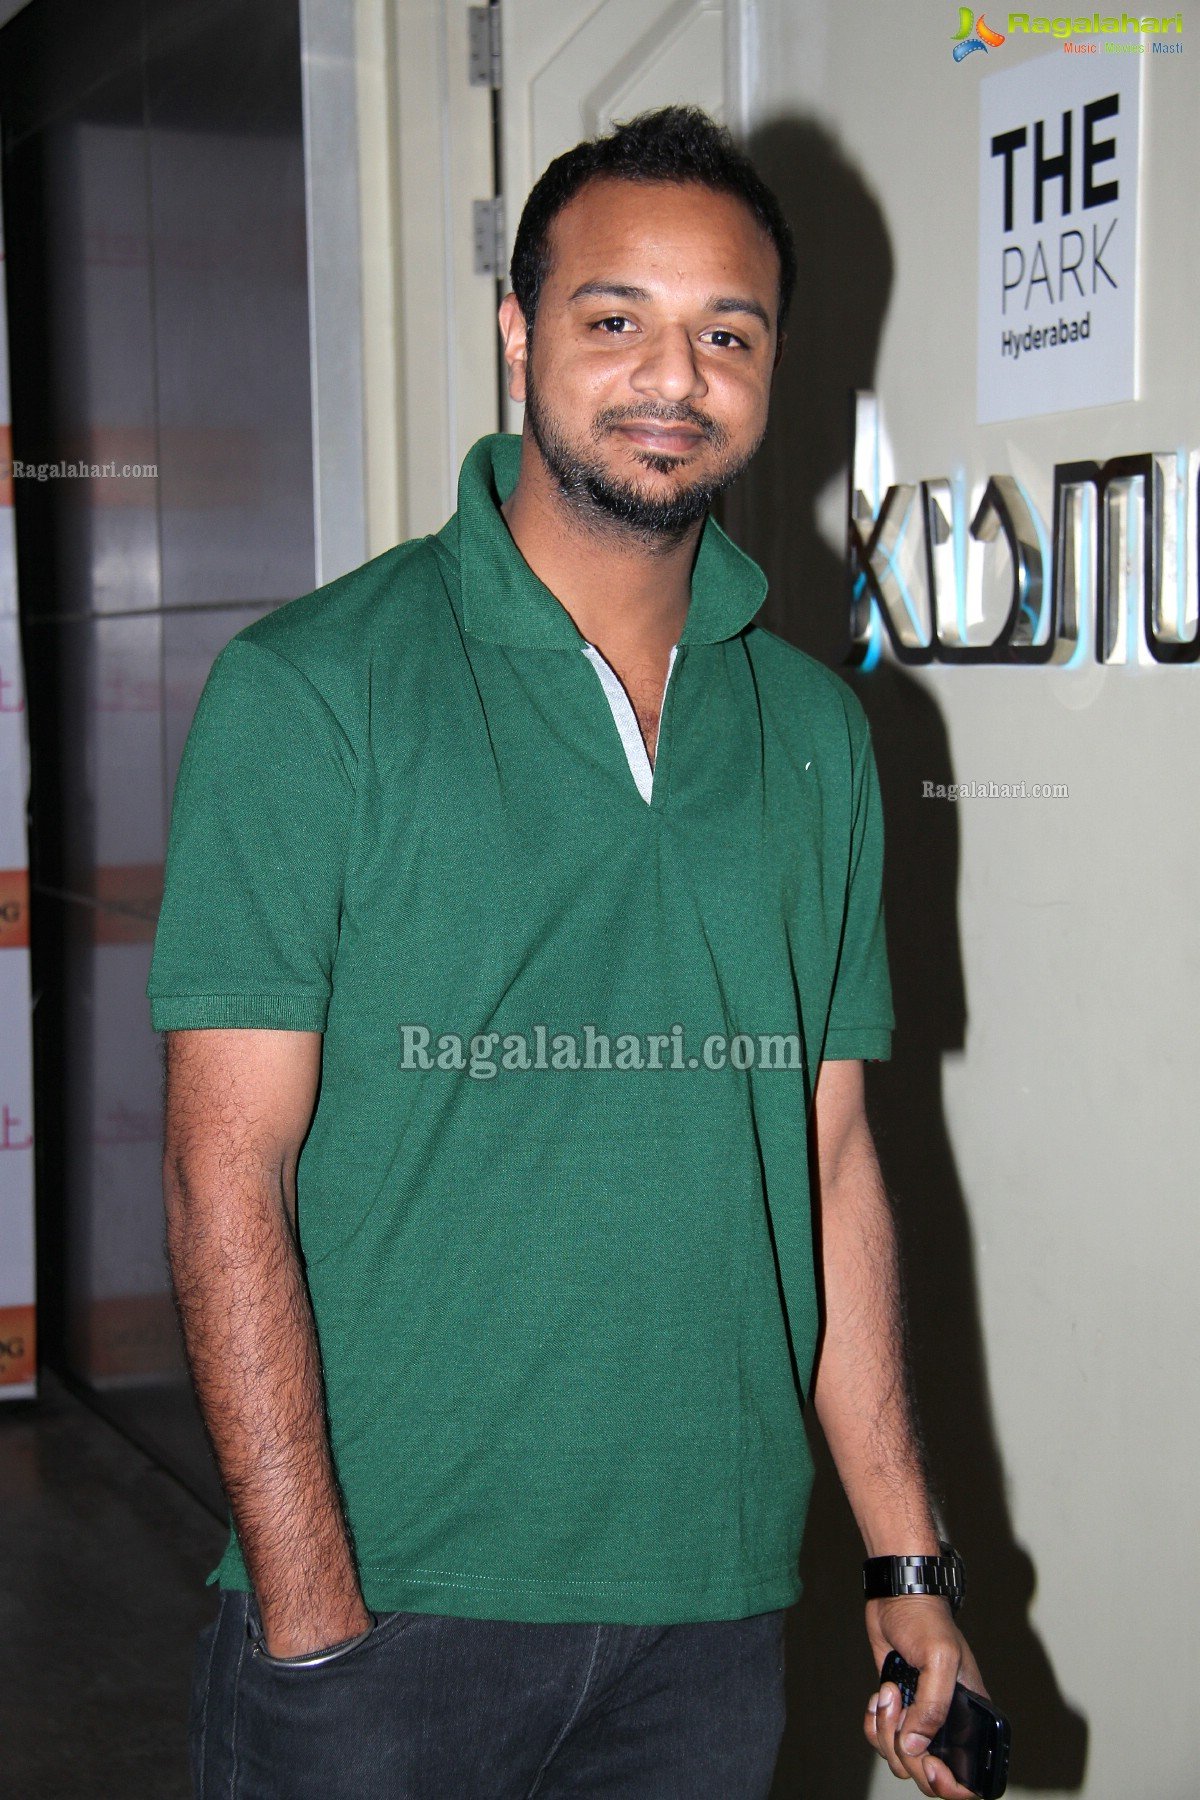 Club Night with DJ Jay at Kismet, Hyderabad (Jan 4, 2014)